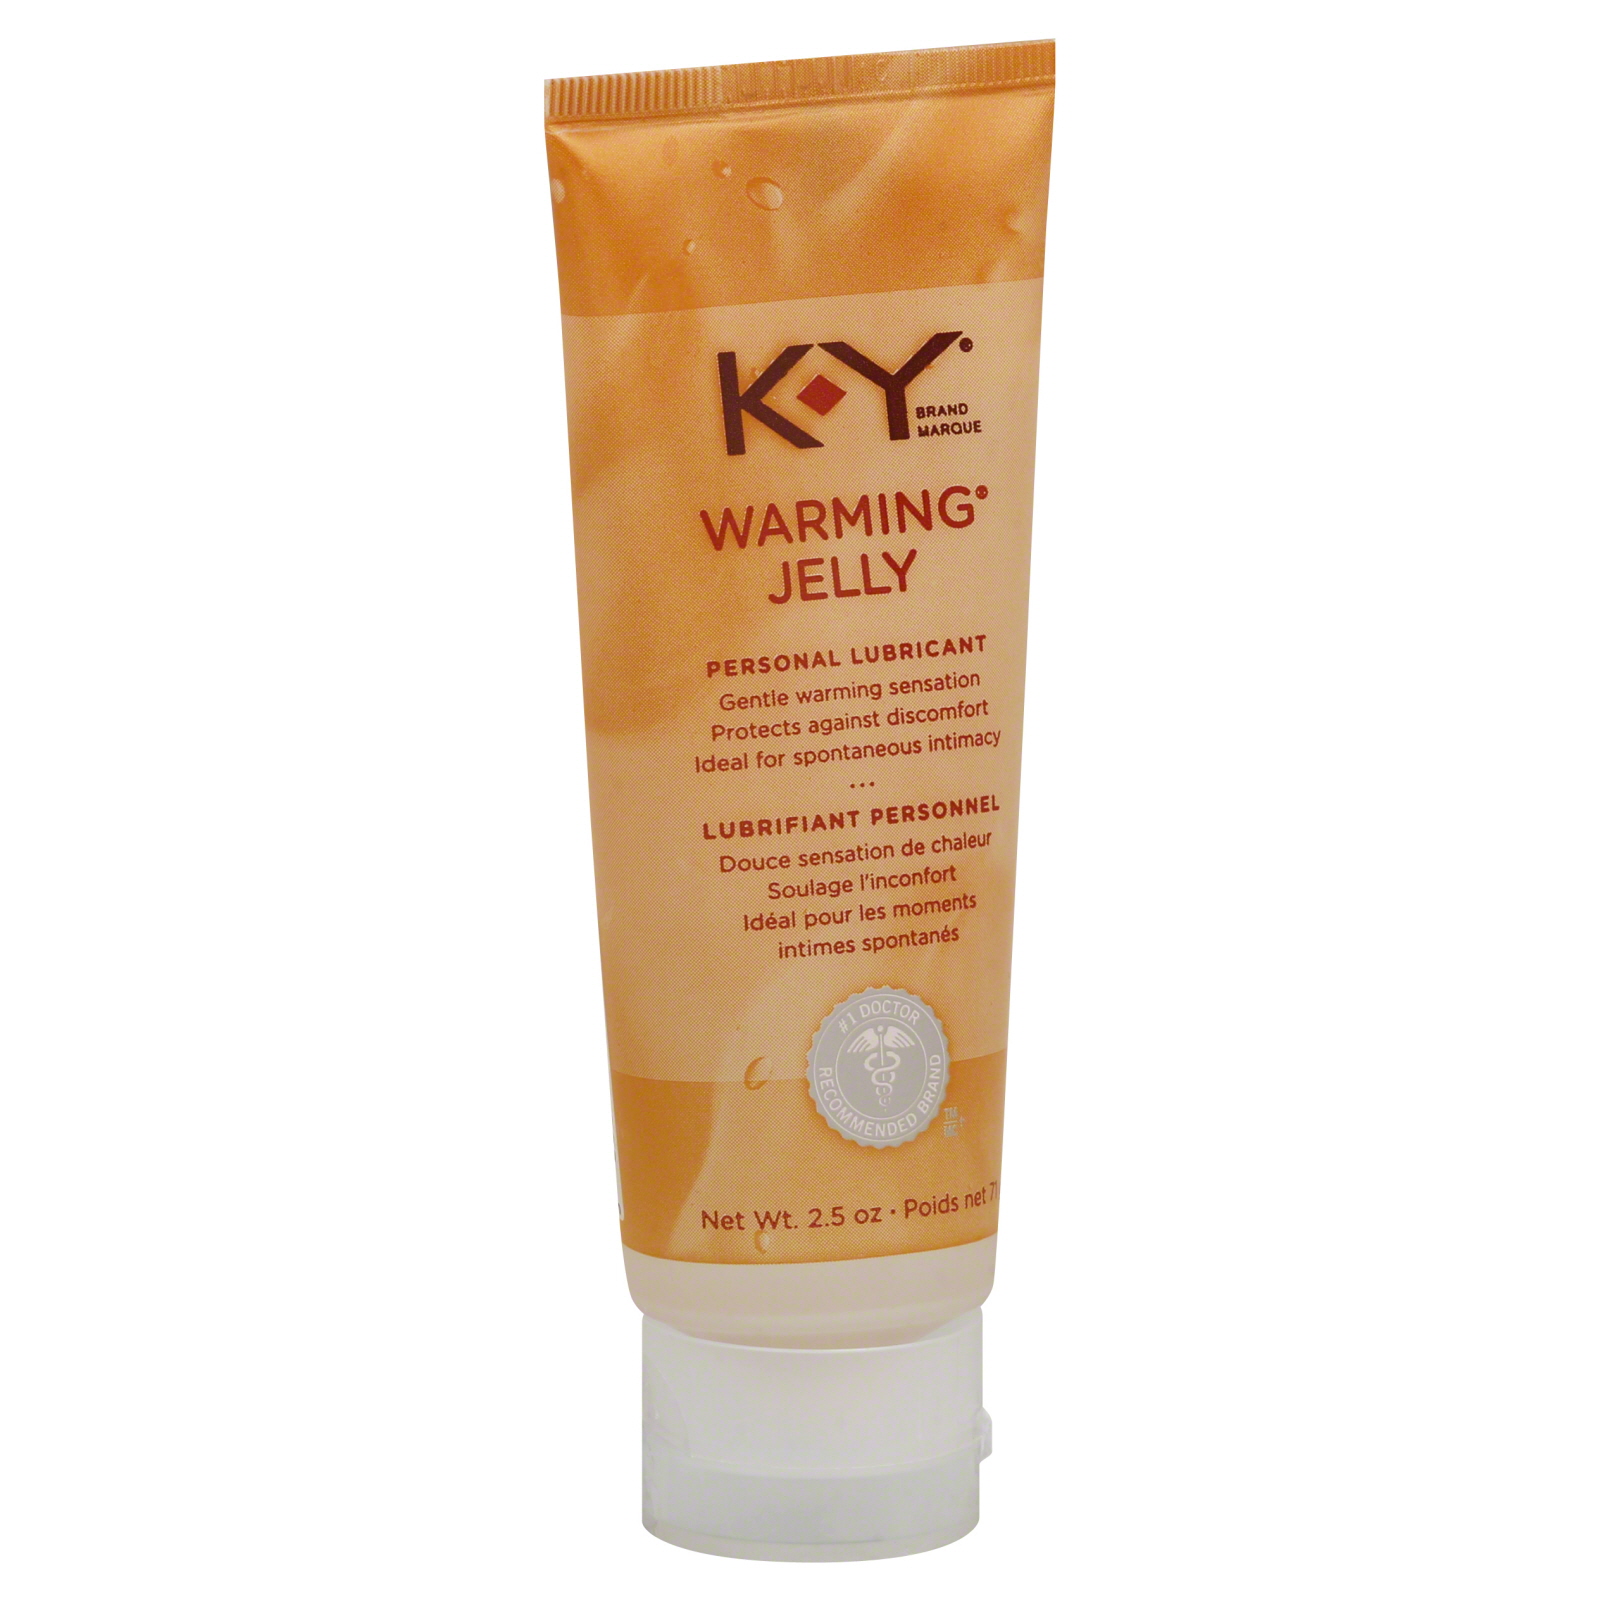 K-Y Brand Warming Personal Lubricant